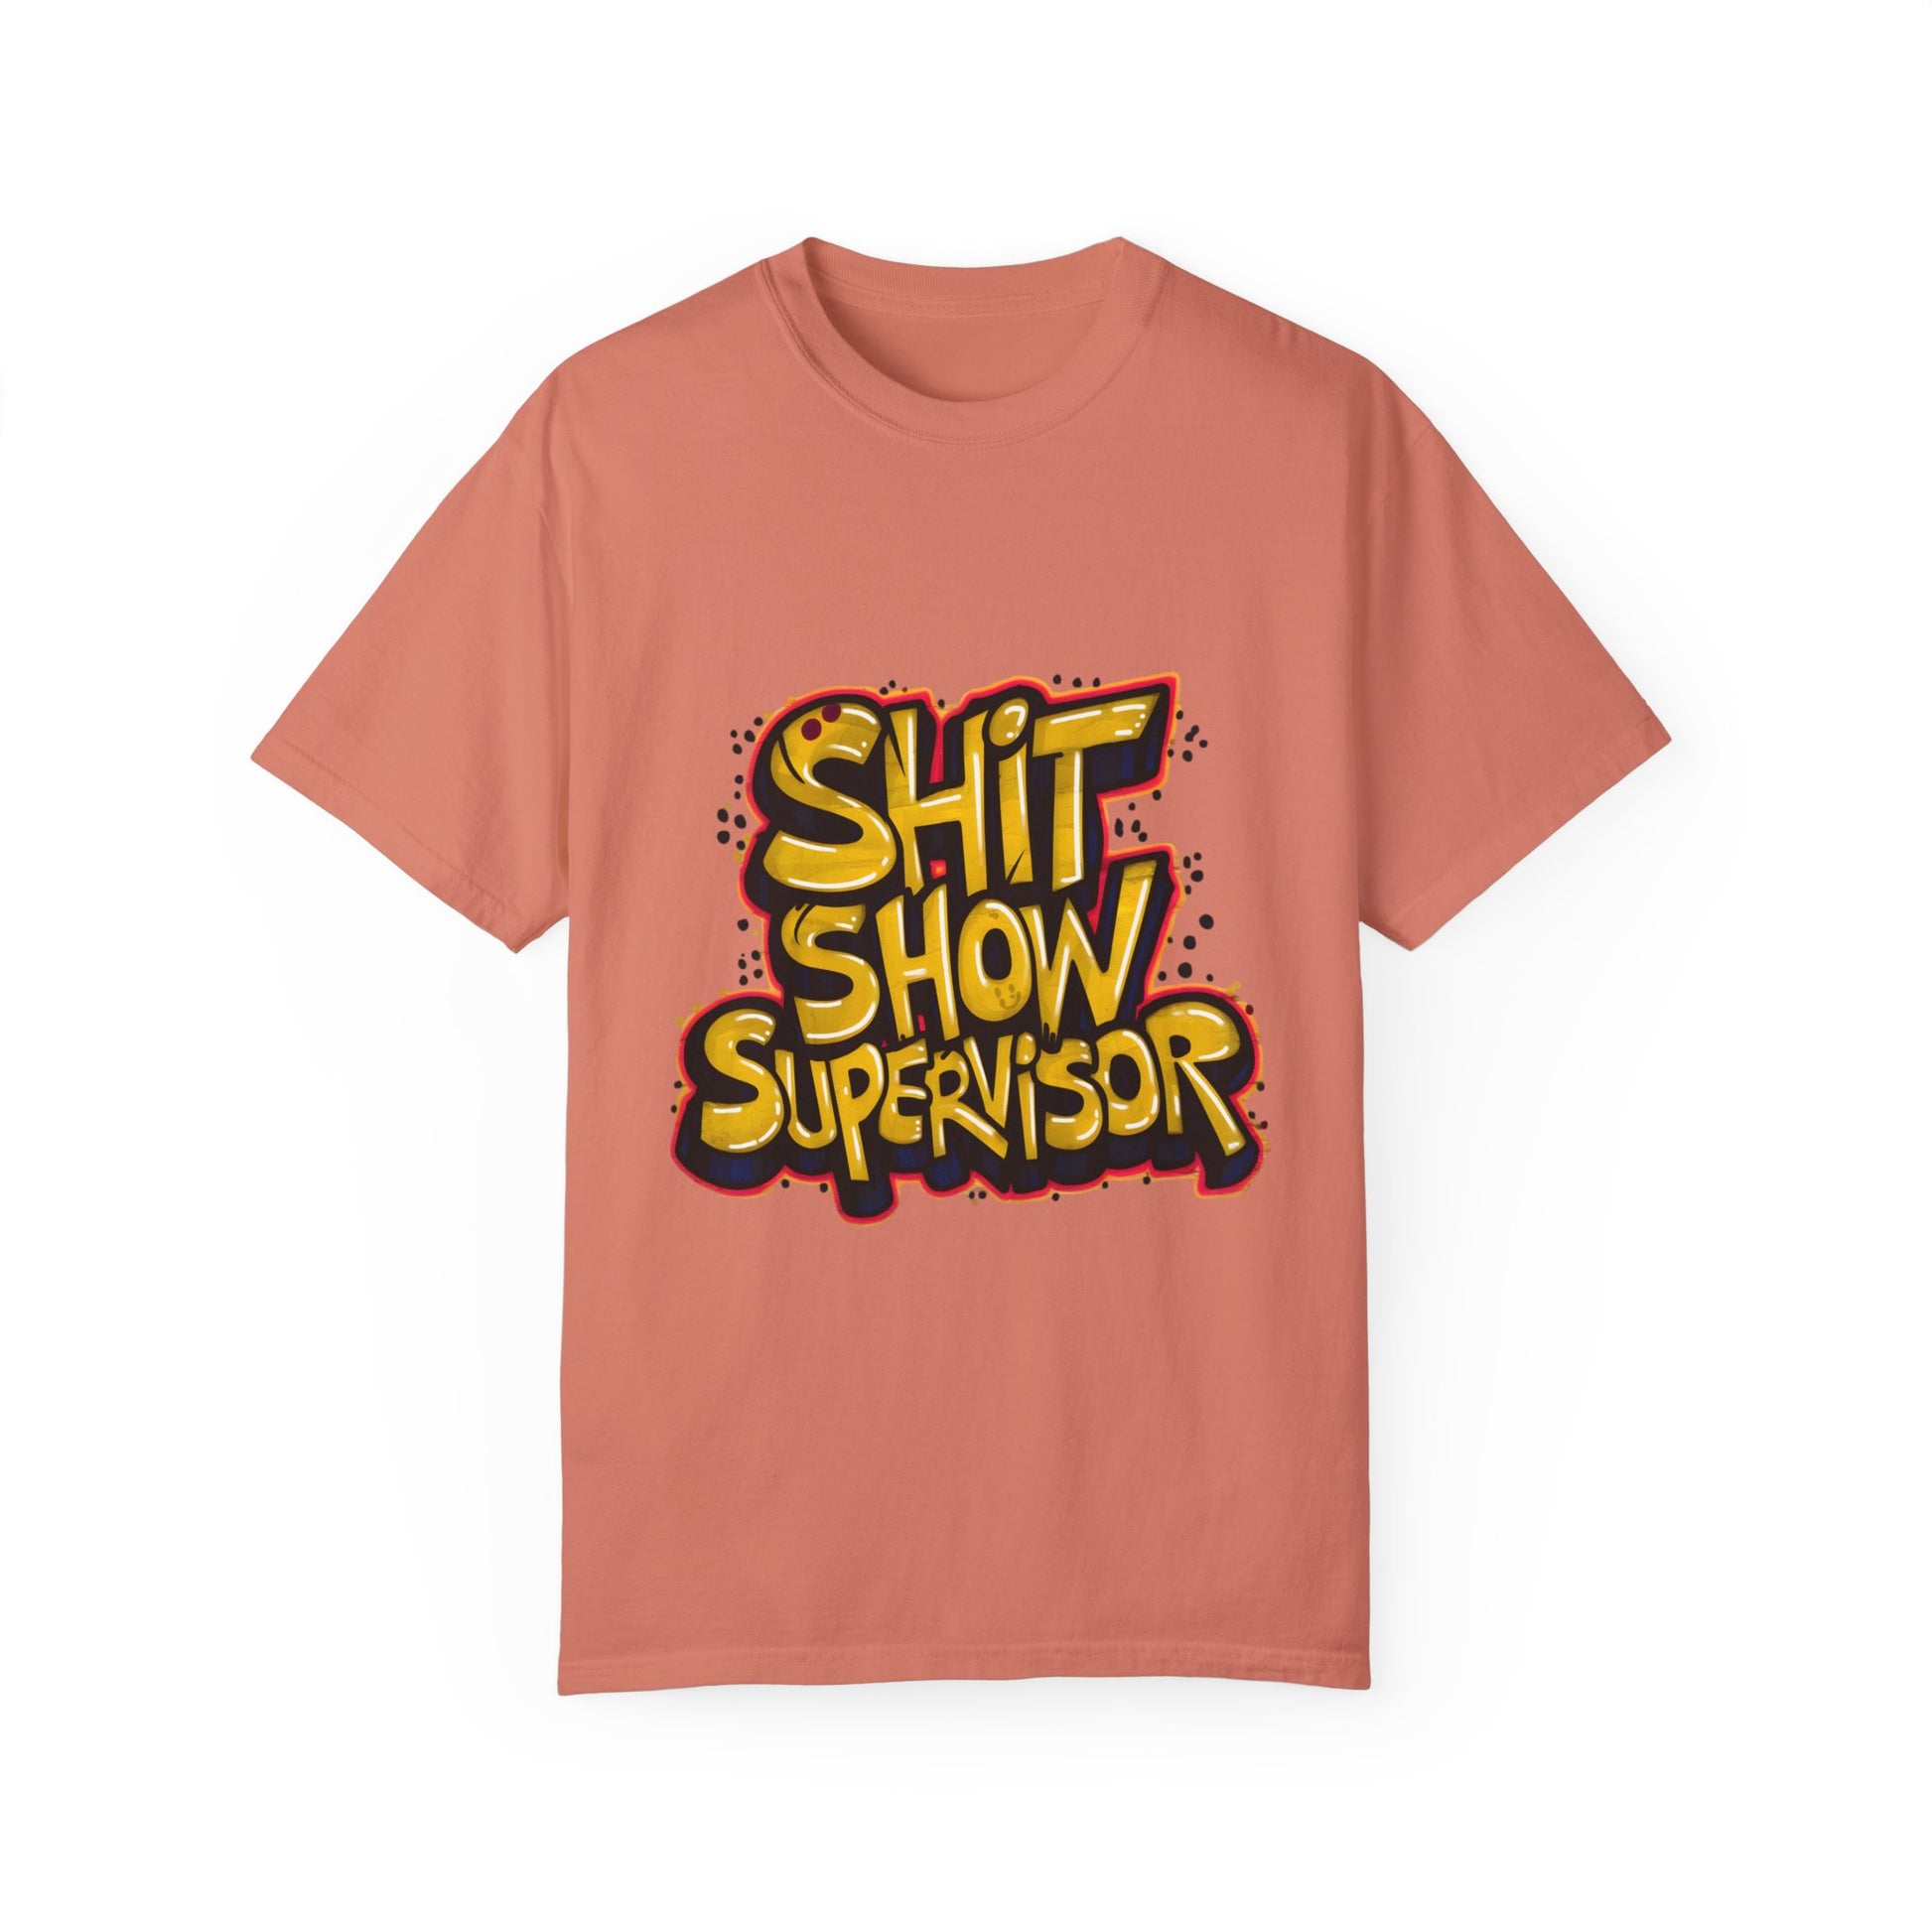 Shit Show Supervisor Urban Sarcastic Graphic Unisex Garment Dyed T-shirt Cotton Funny Humorous Graphic Soft Premium Unisex Men Women Terracotta T-shirt Birthday Gift-14